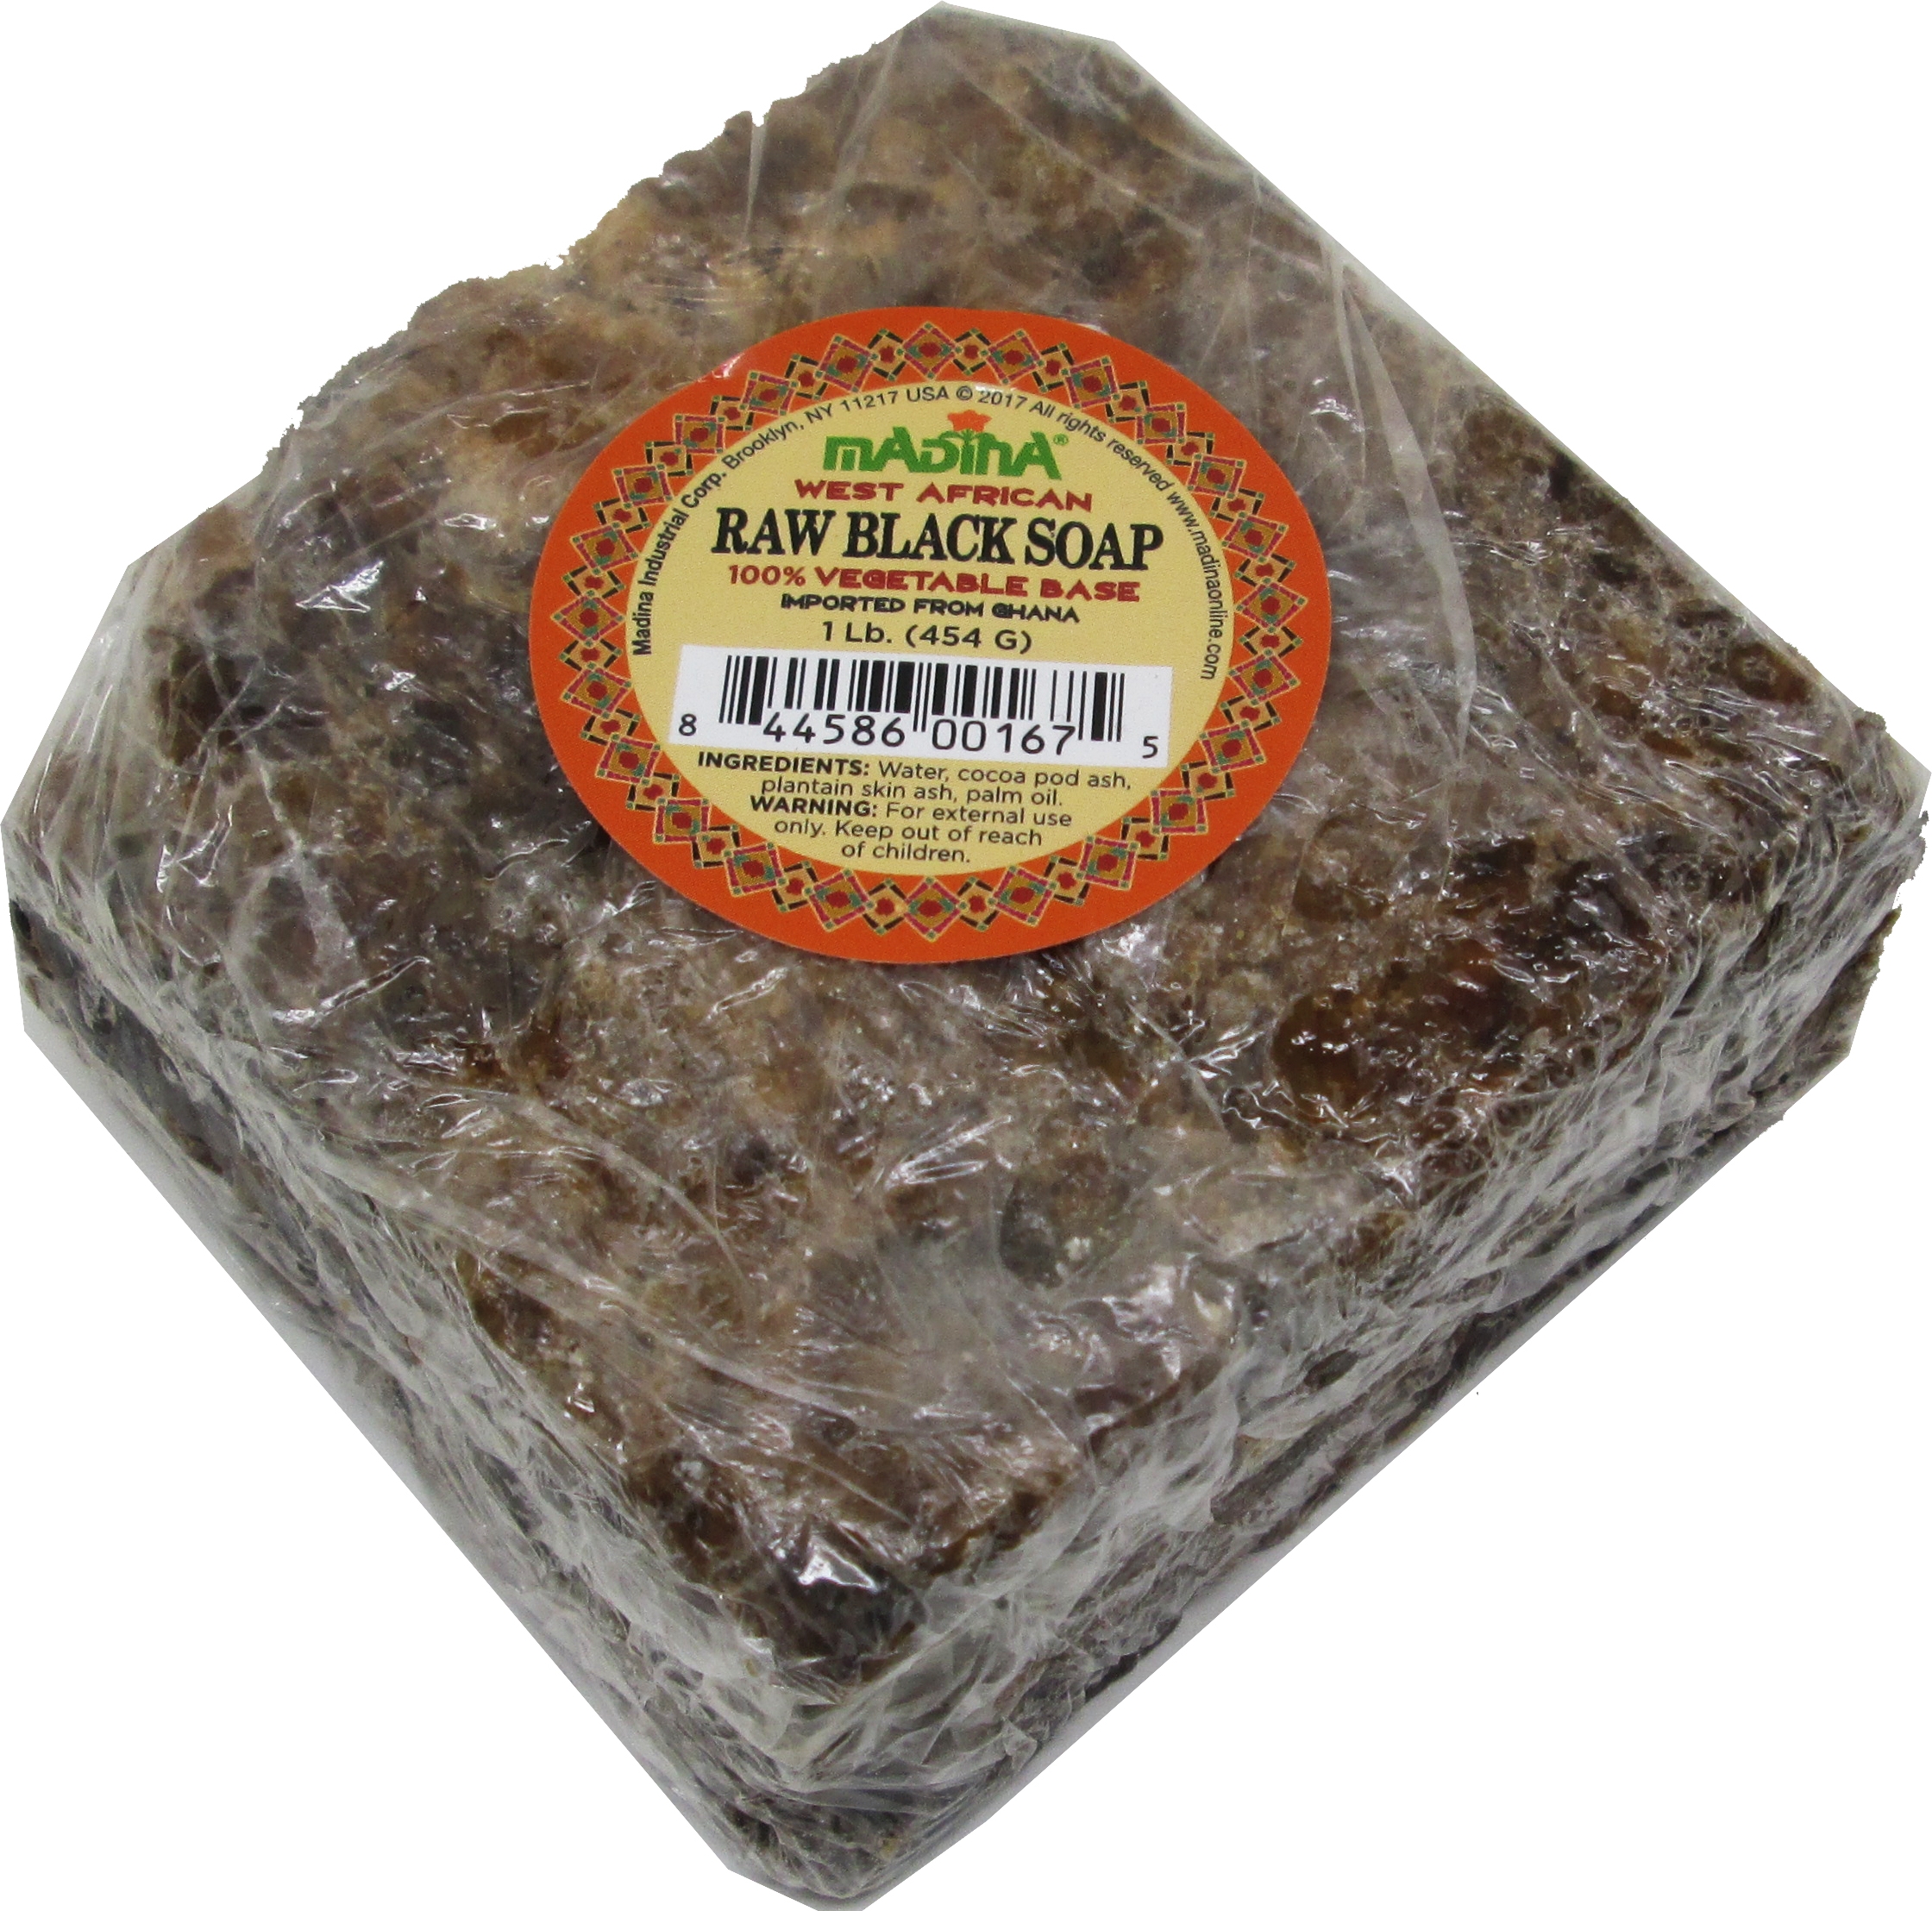 African Black Soap – 1 lb